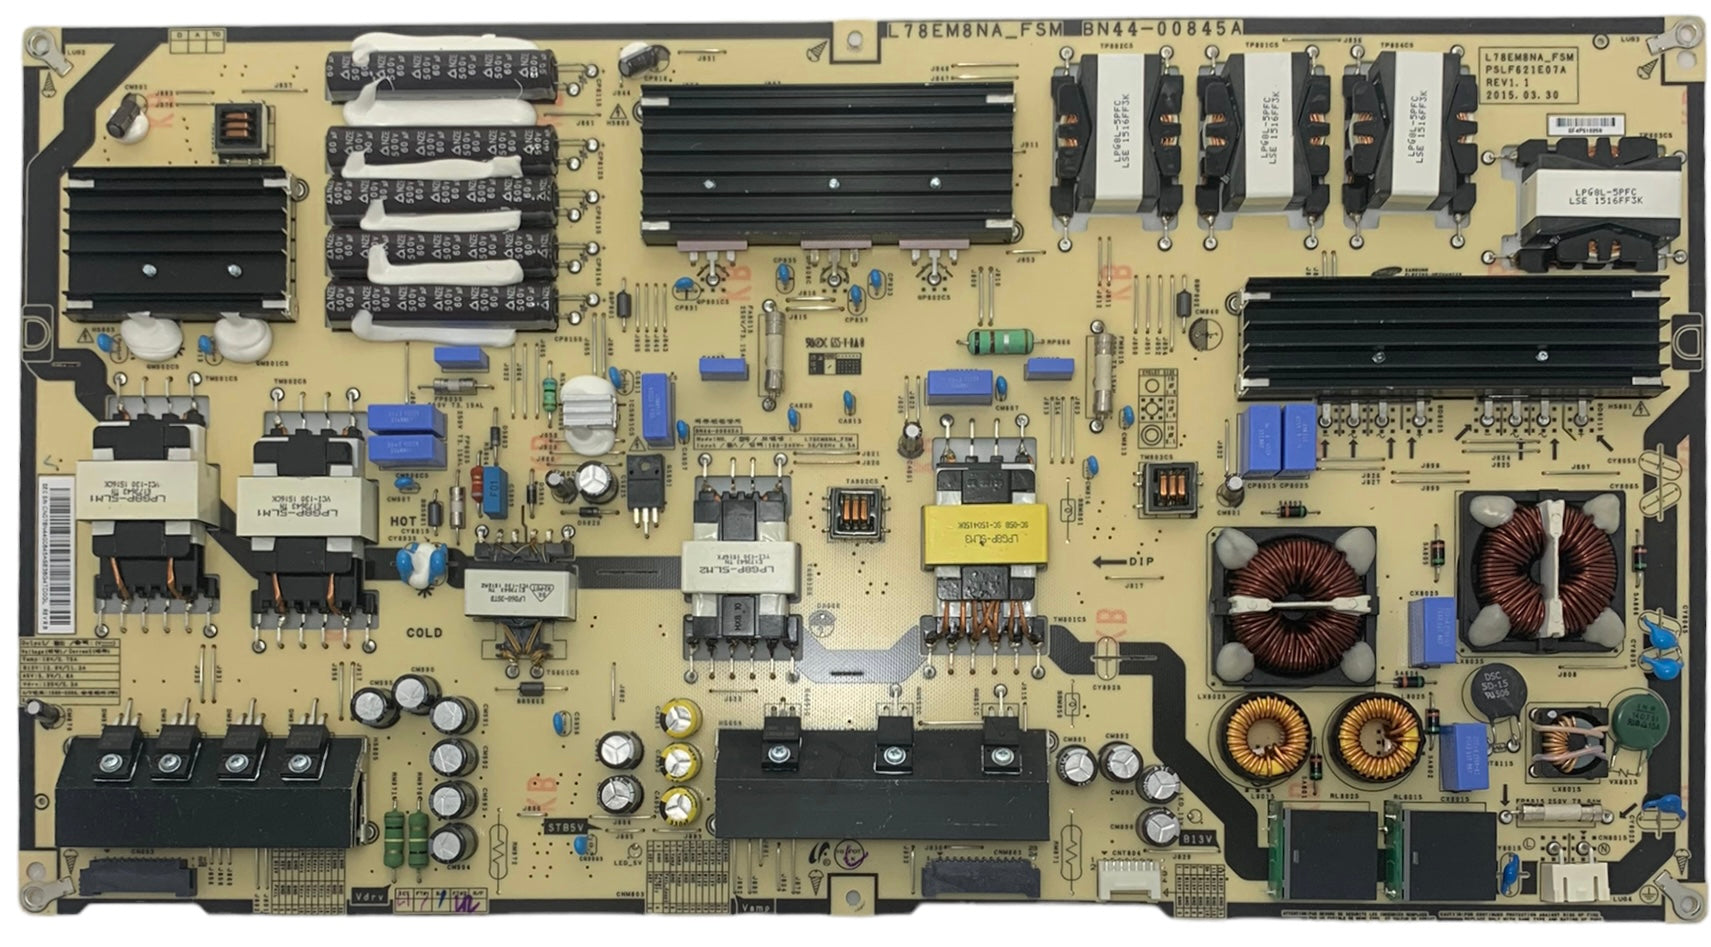 Samsung BN44-00845A Power Supply Board